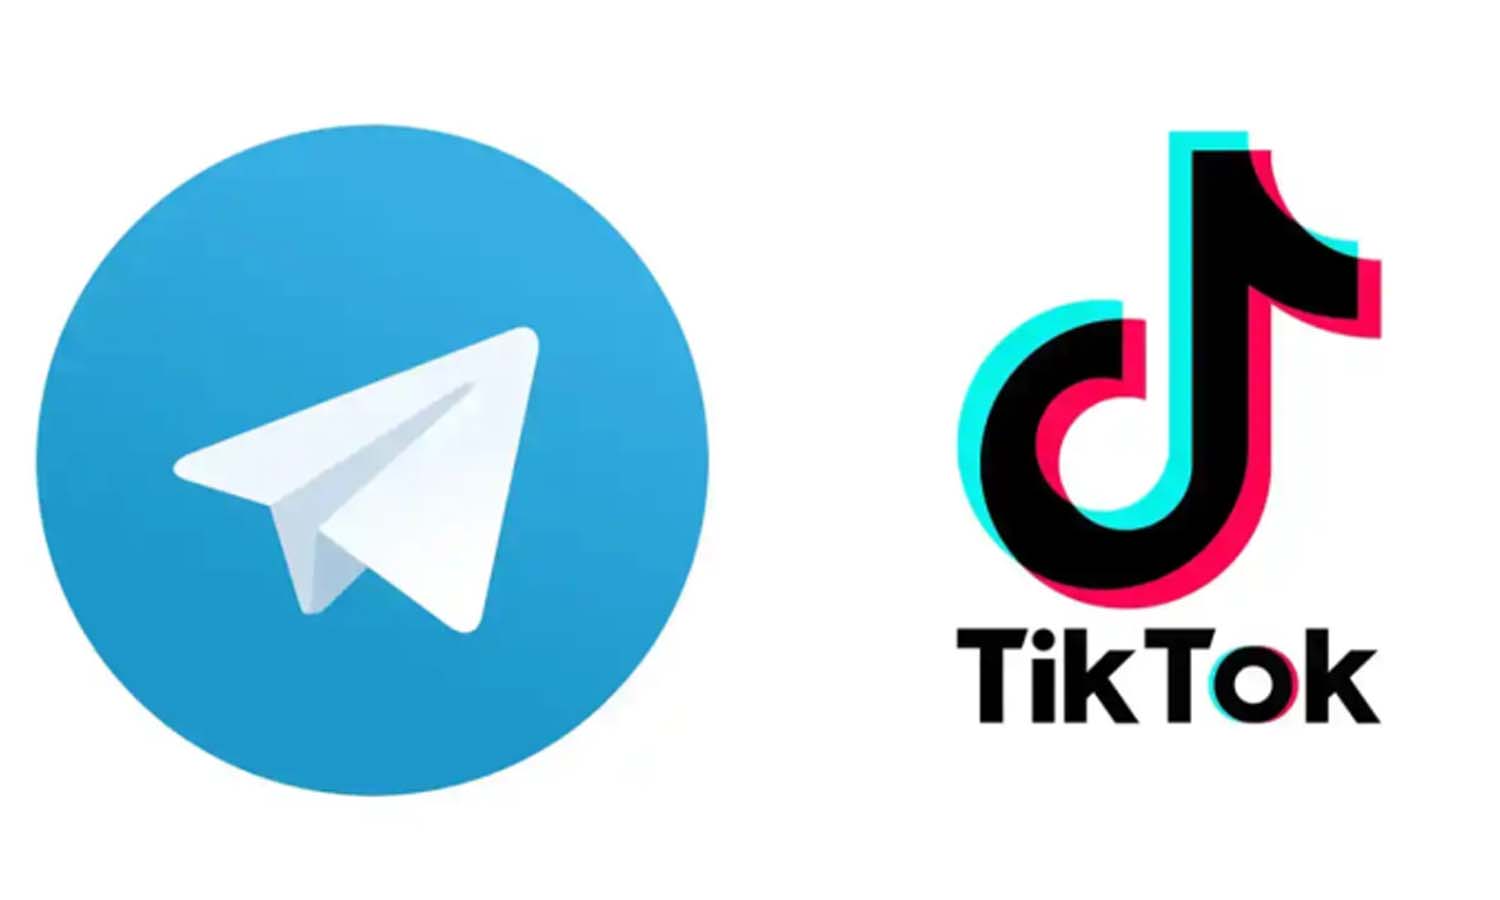 Somalia Bans TikTok and Telegram to Curb Spread of Obscene Content and Terrorist Activities